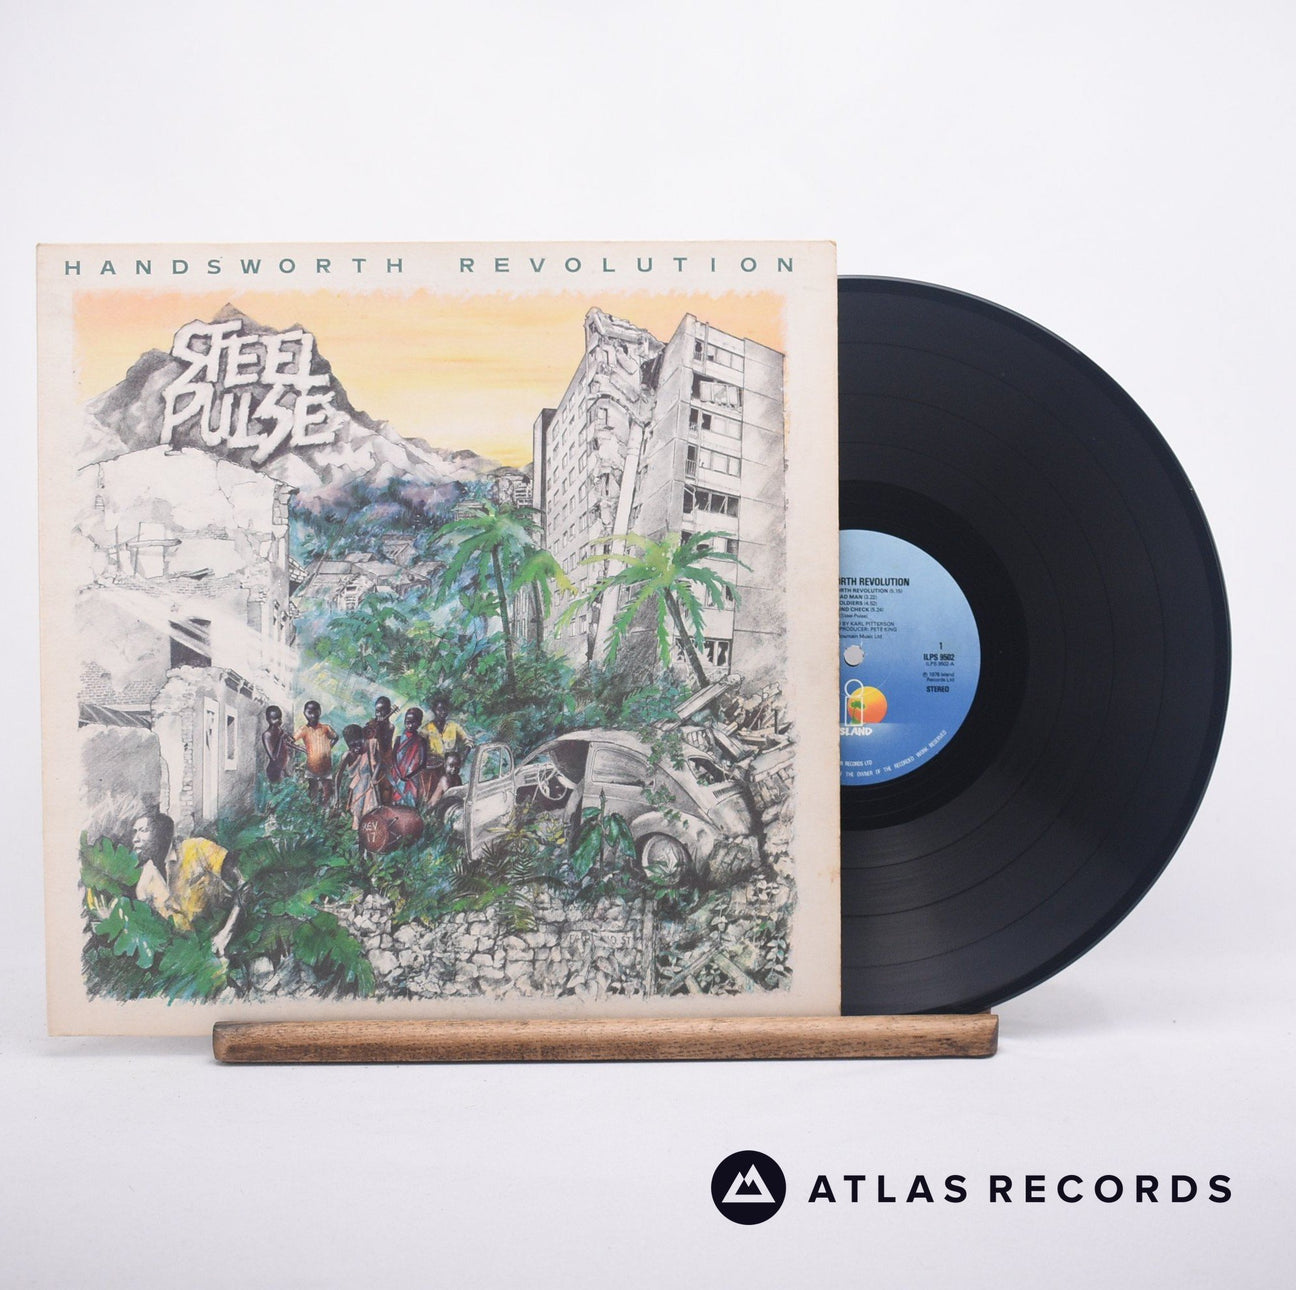 Steel Pulse Handsworth Revolution LP Vinyl Record - Front Cover & Record